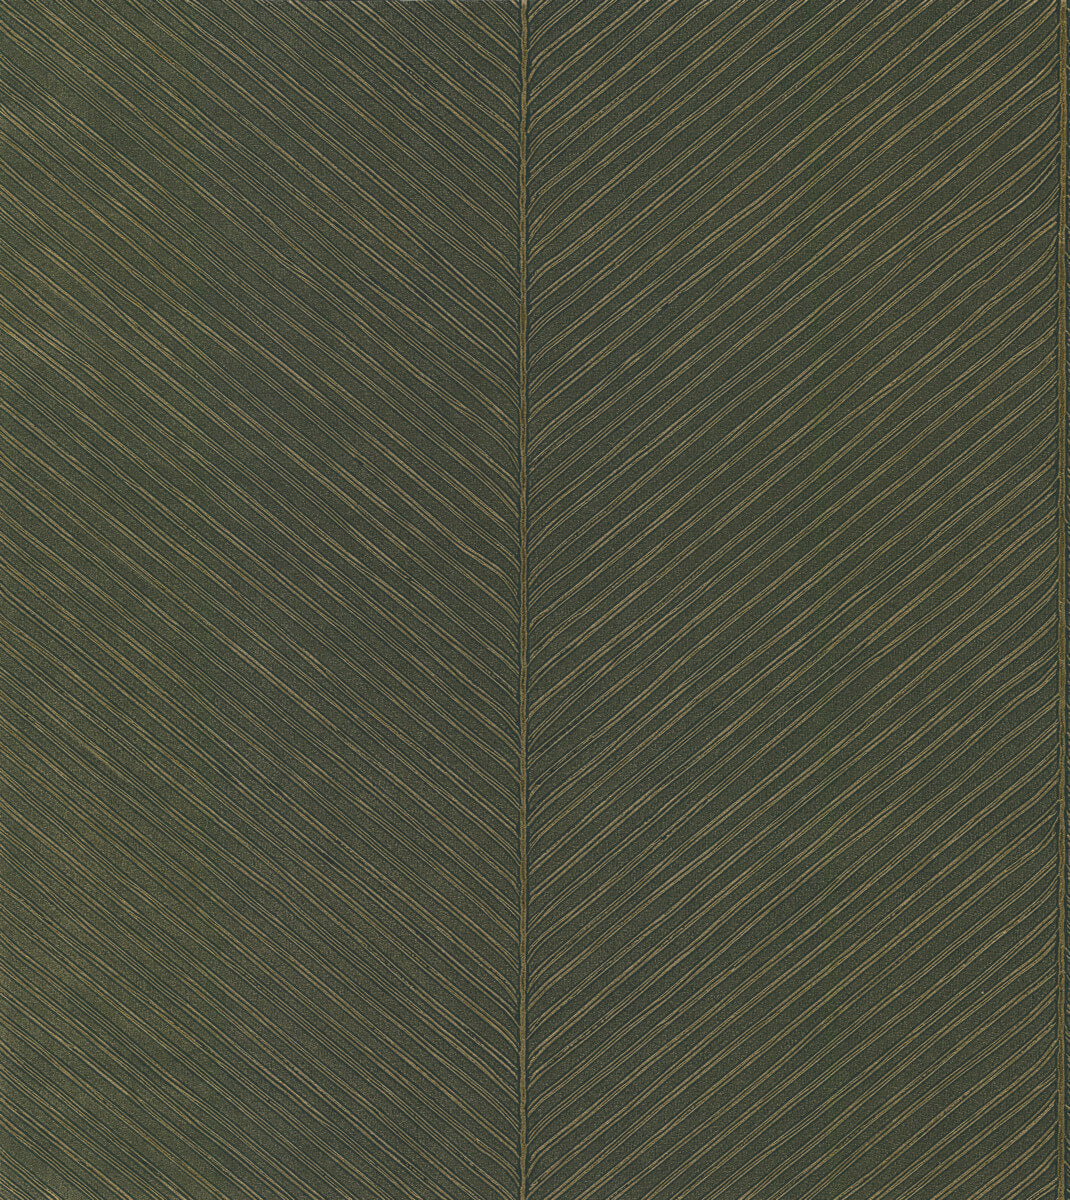 Tropics Resource Library Palm Chevron Wallpaper - SAMPLE